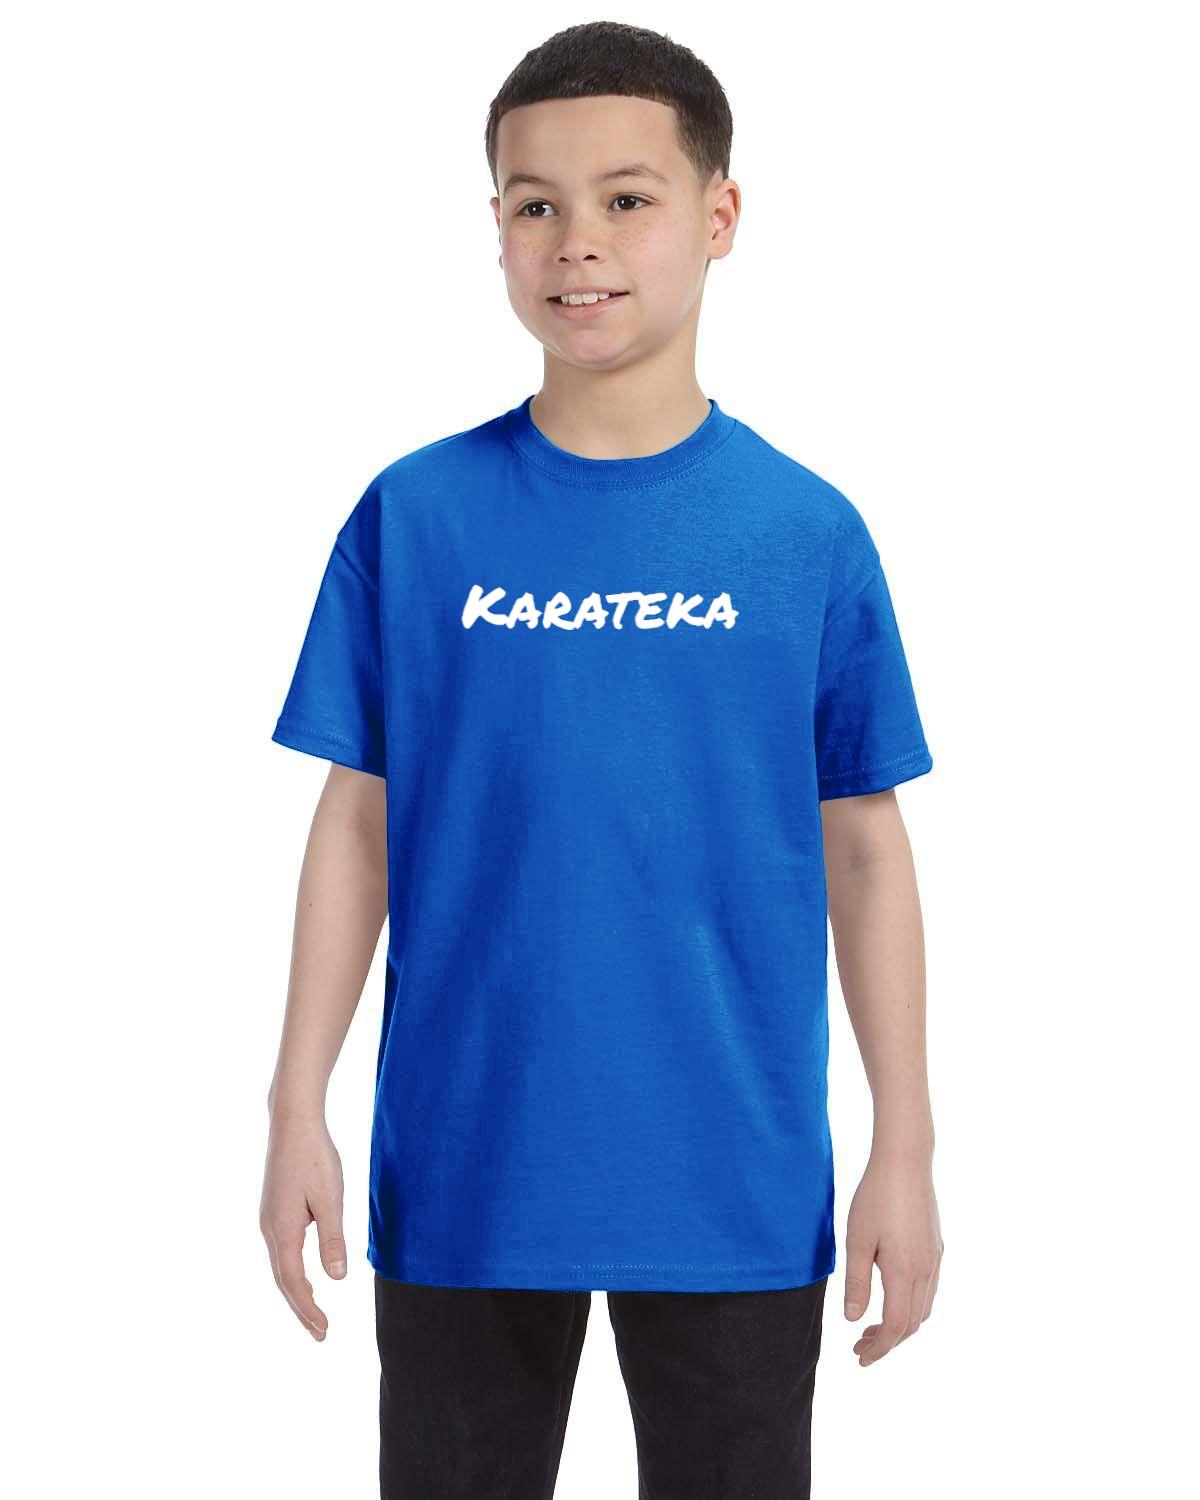 Karateka Kids T-Shirt